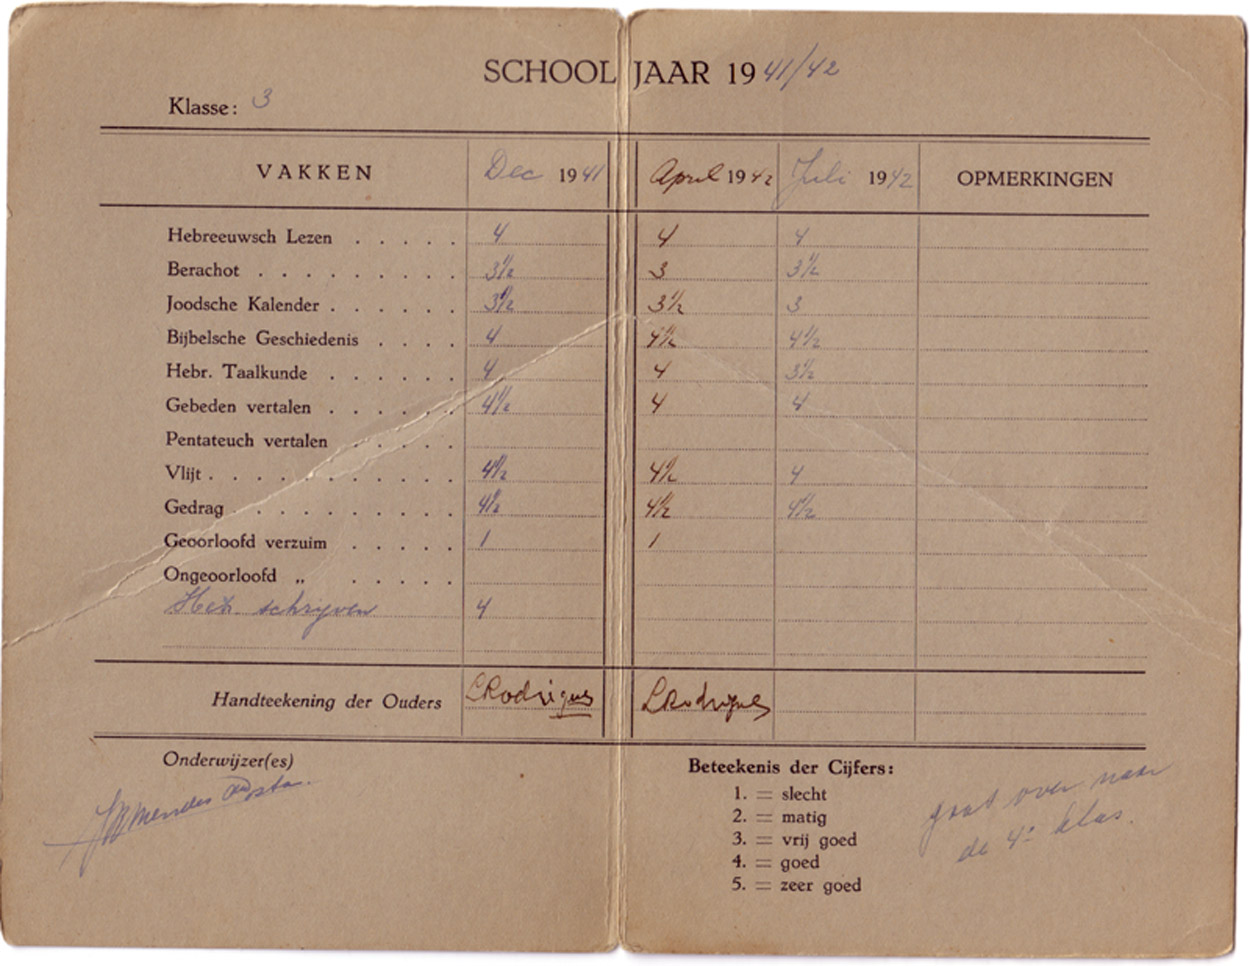 Inside of Report Card of Elisabeth Rodrigues 1941-42